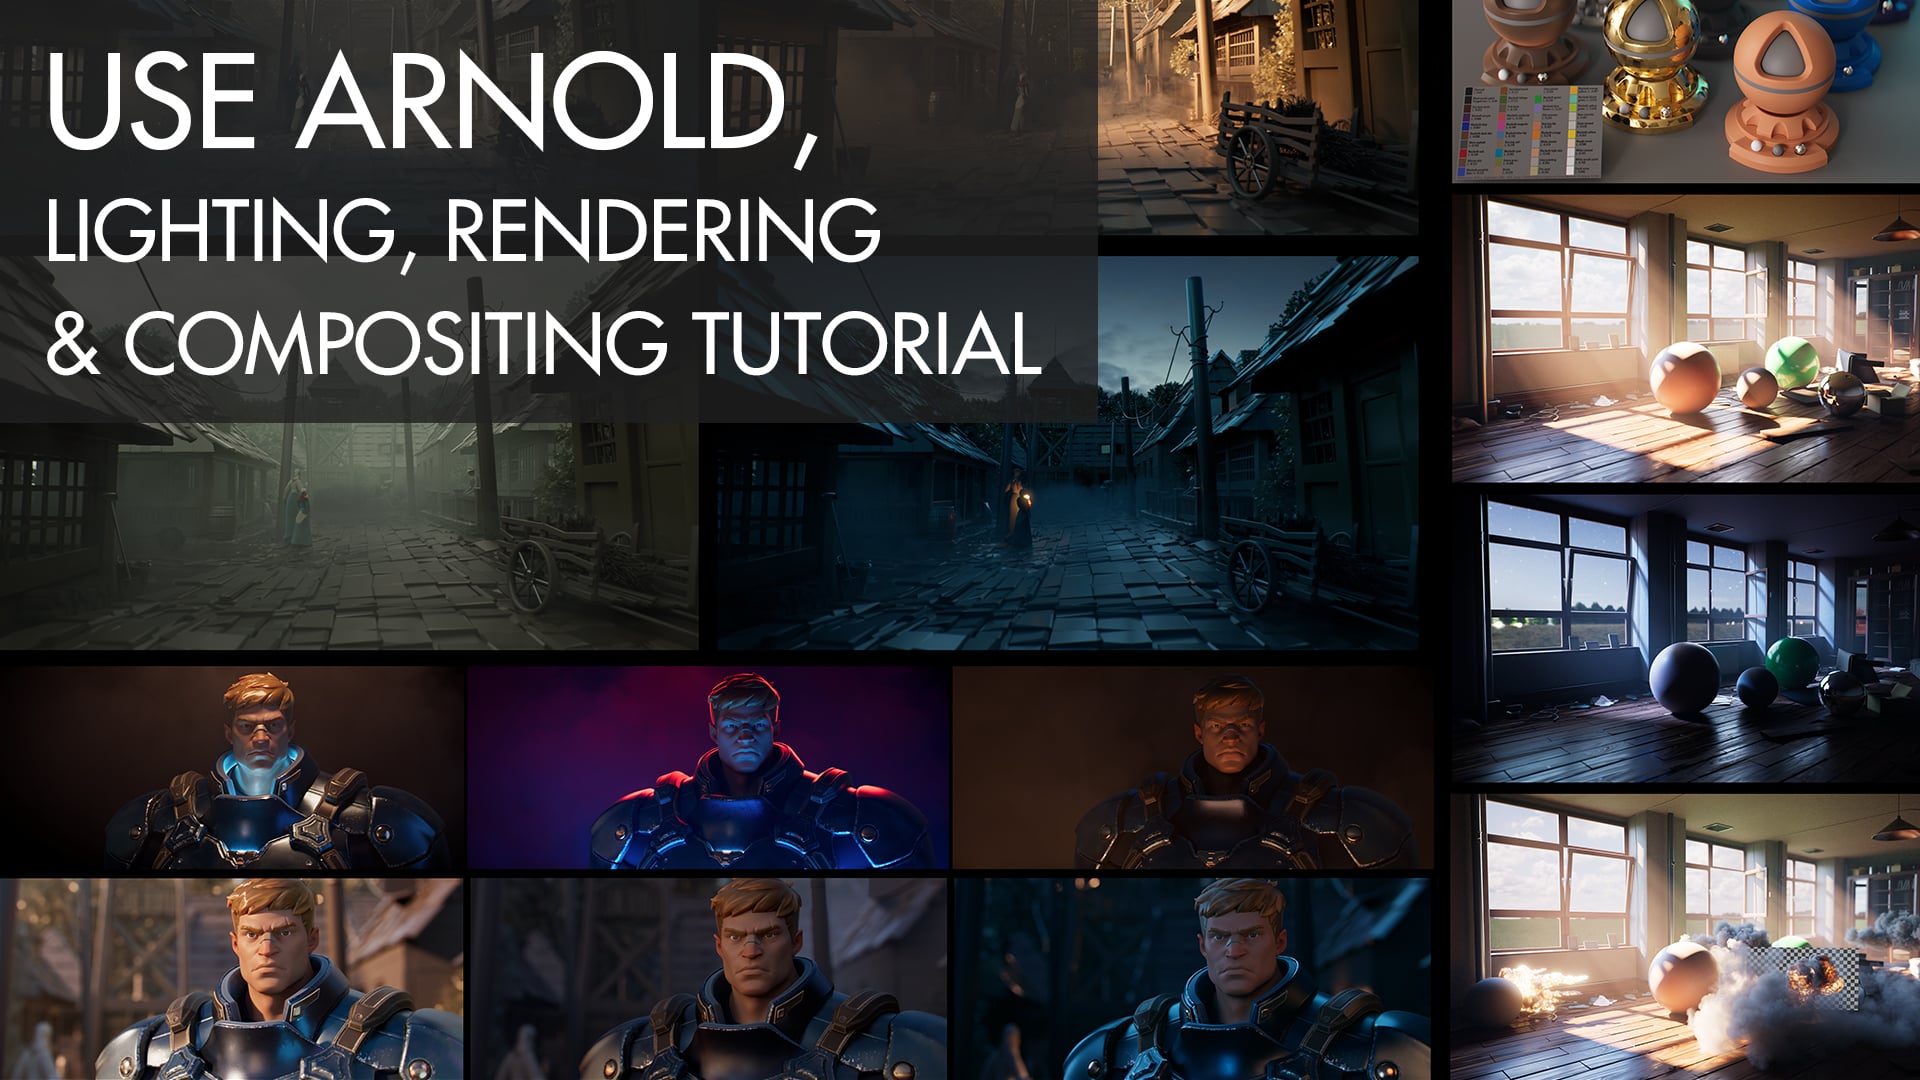 Use Arnold, Lighting, Rendering Compositing Tutorial - WingFox on Vimeo